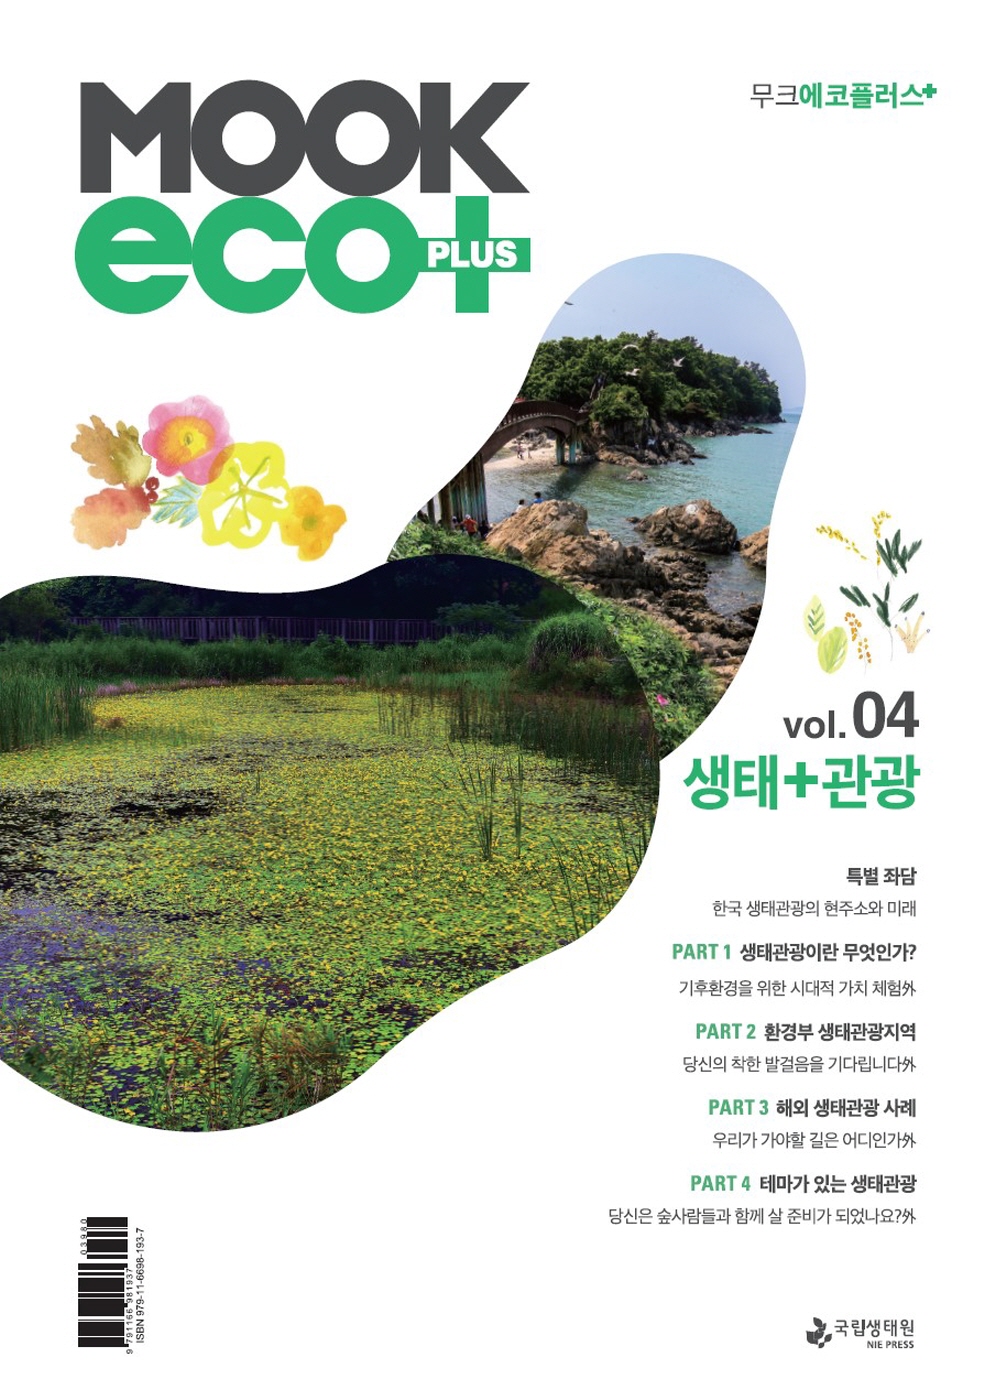 MOOK ecoPLUS 무크에코플러스 vol 04 생태+관광 특별좌담 한국 생태관광의 현주소와 미래  PART 1 생태관광이란 무엇인가 기후환경을 위한 시대적 가치체험外 PART 2 환경부 생태관광지역